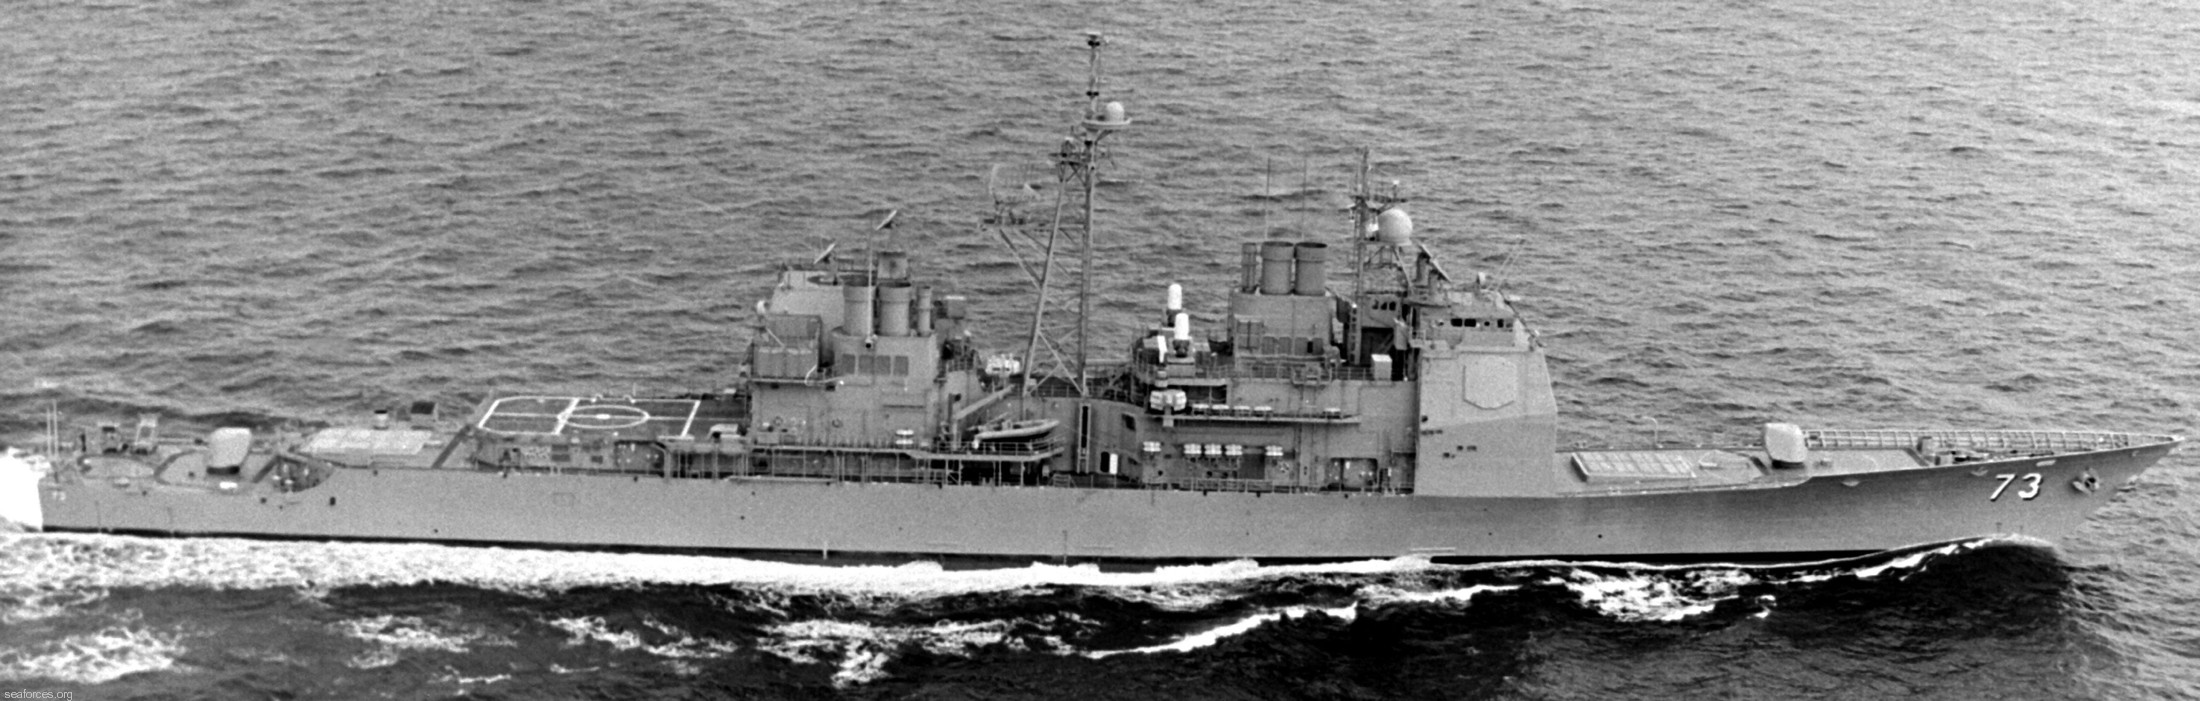 cg-73 uss port royal ticonderoga class guided missile cruiser navy 45